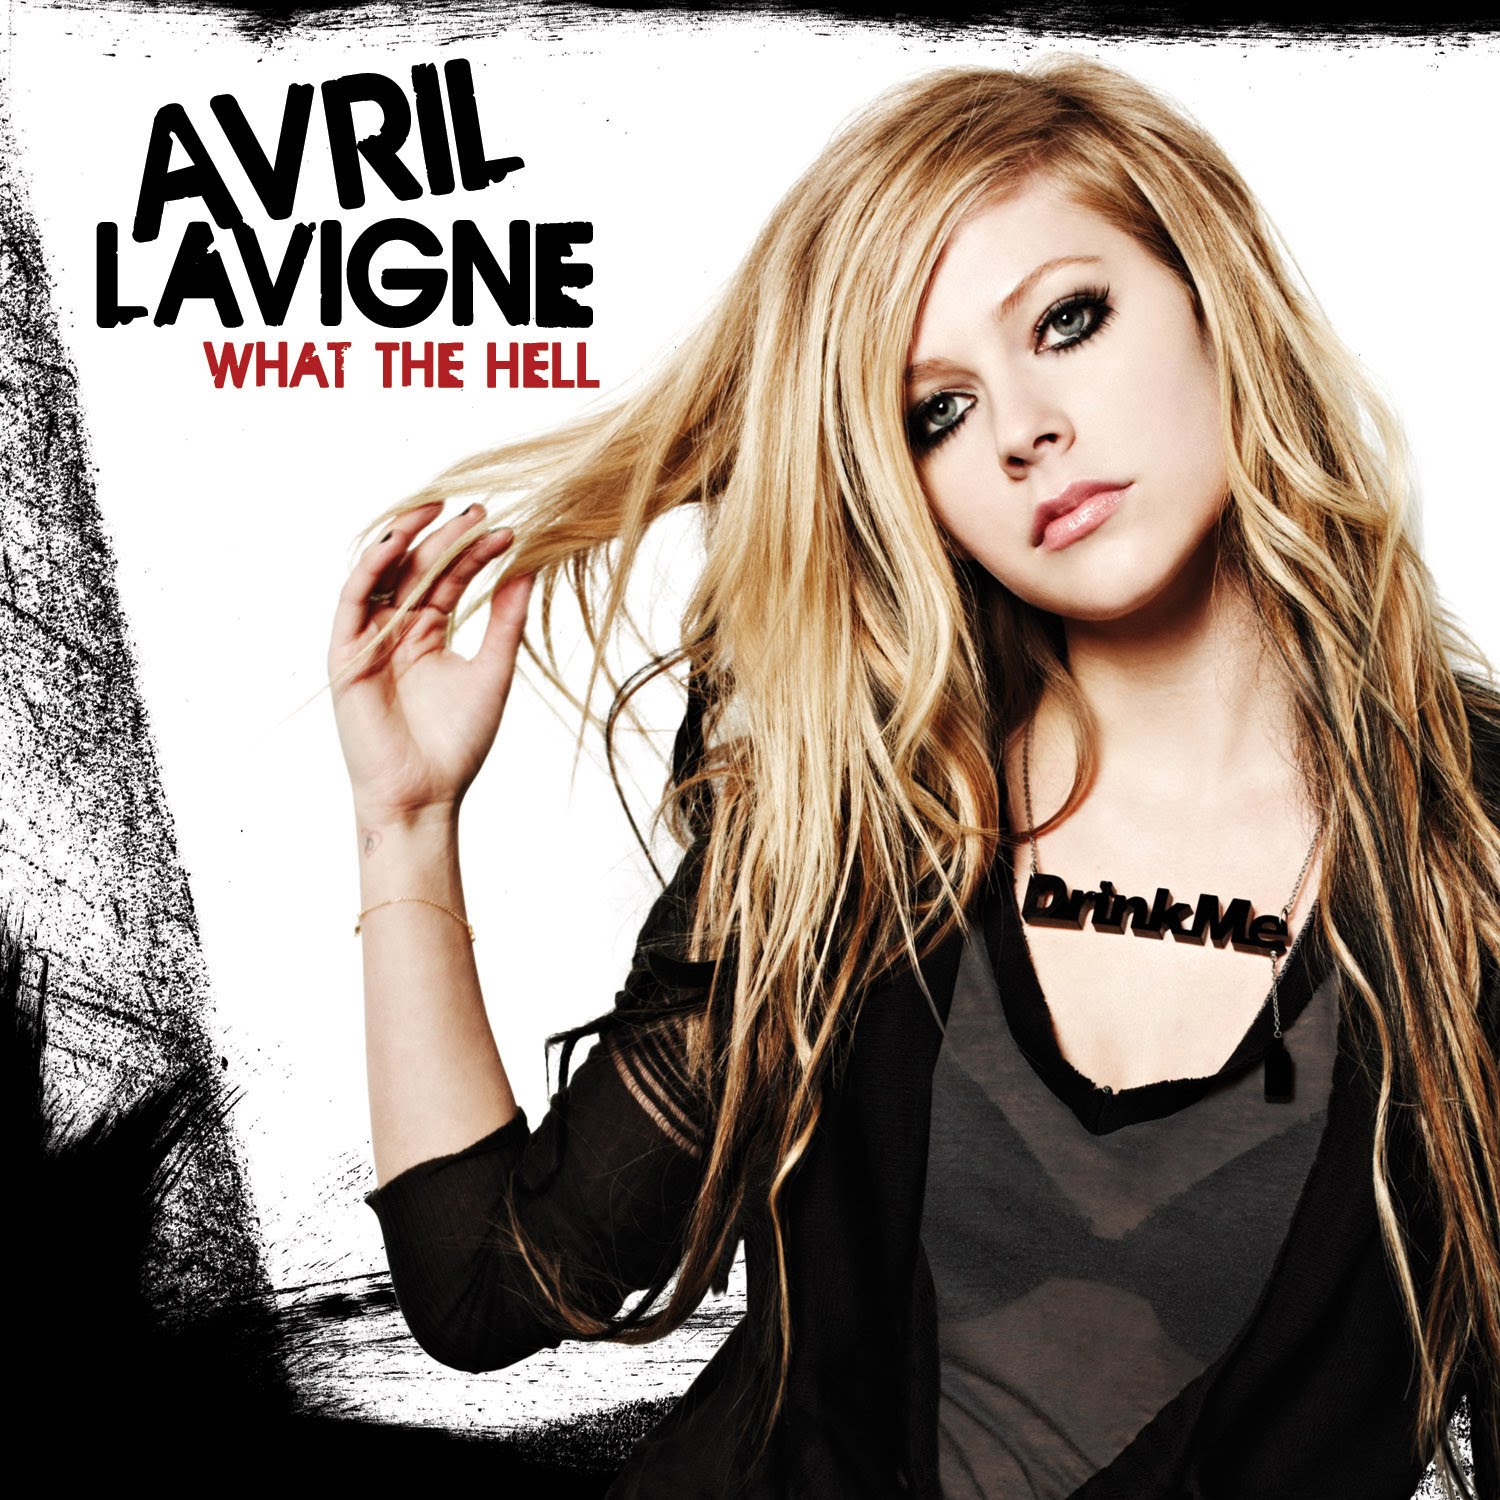 http://3.bp.blogspot.com/-mnNBUb1_9GY/TlnA8UzrRyI/AAAAAAAABg4/2zYTtlDjC2g/s1600/Avril+Lavigne+-+What+the+Hell+%2528Official+Single+Cover%2529.jpg